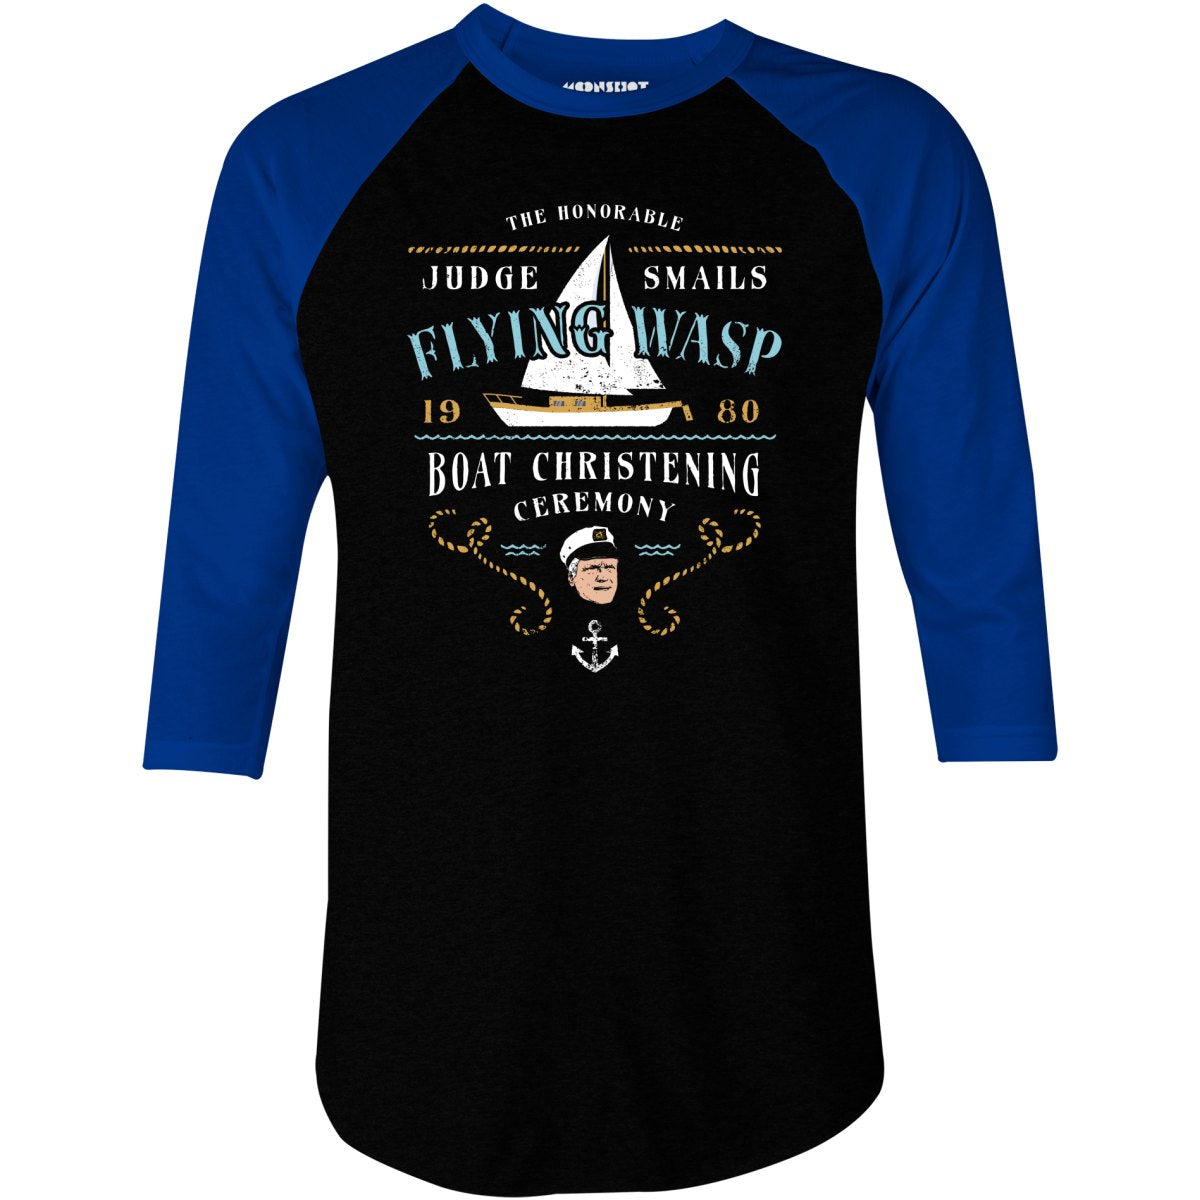 Judge Smails - Flying Wasp Boat Christening Ceremony - 3/4 Sleeve Raglan T-Shirt